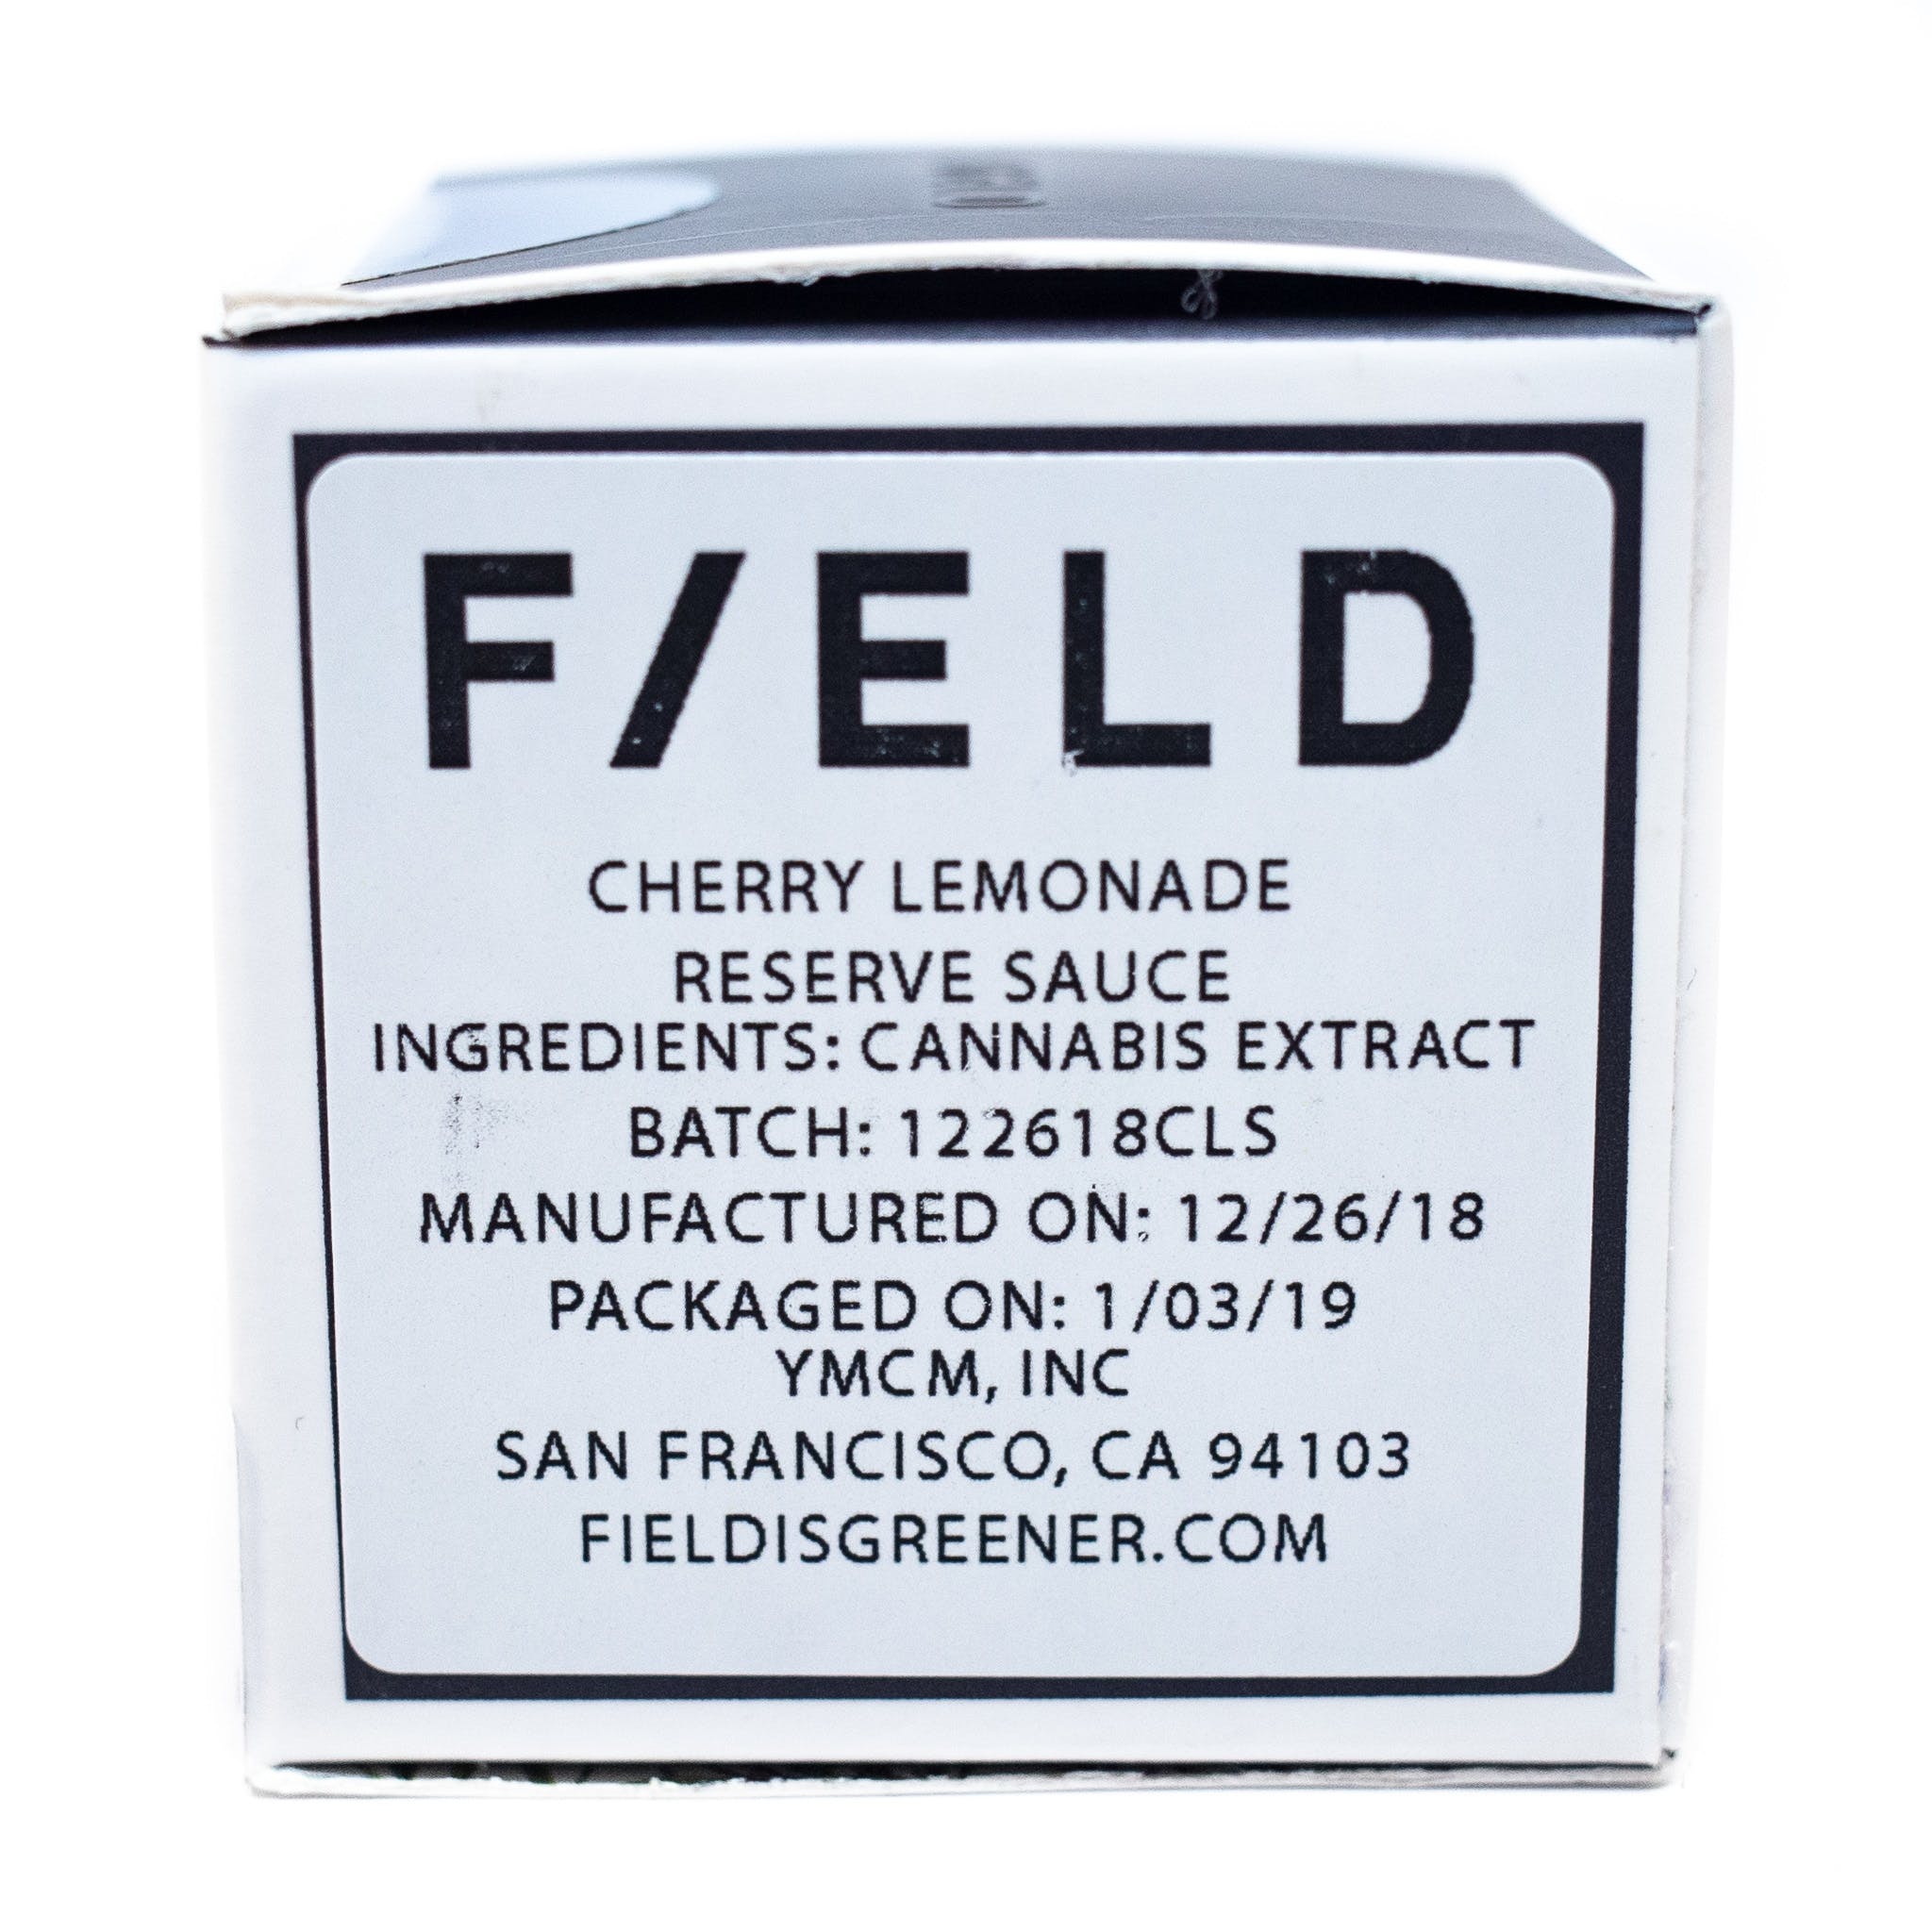 FIELD Cherry Lemonade Sauce